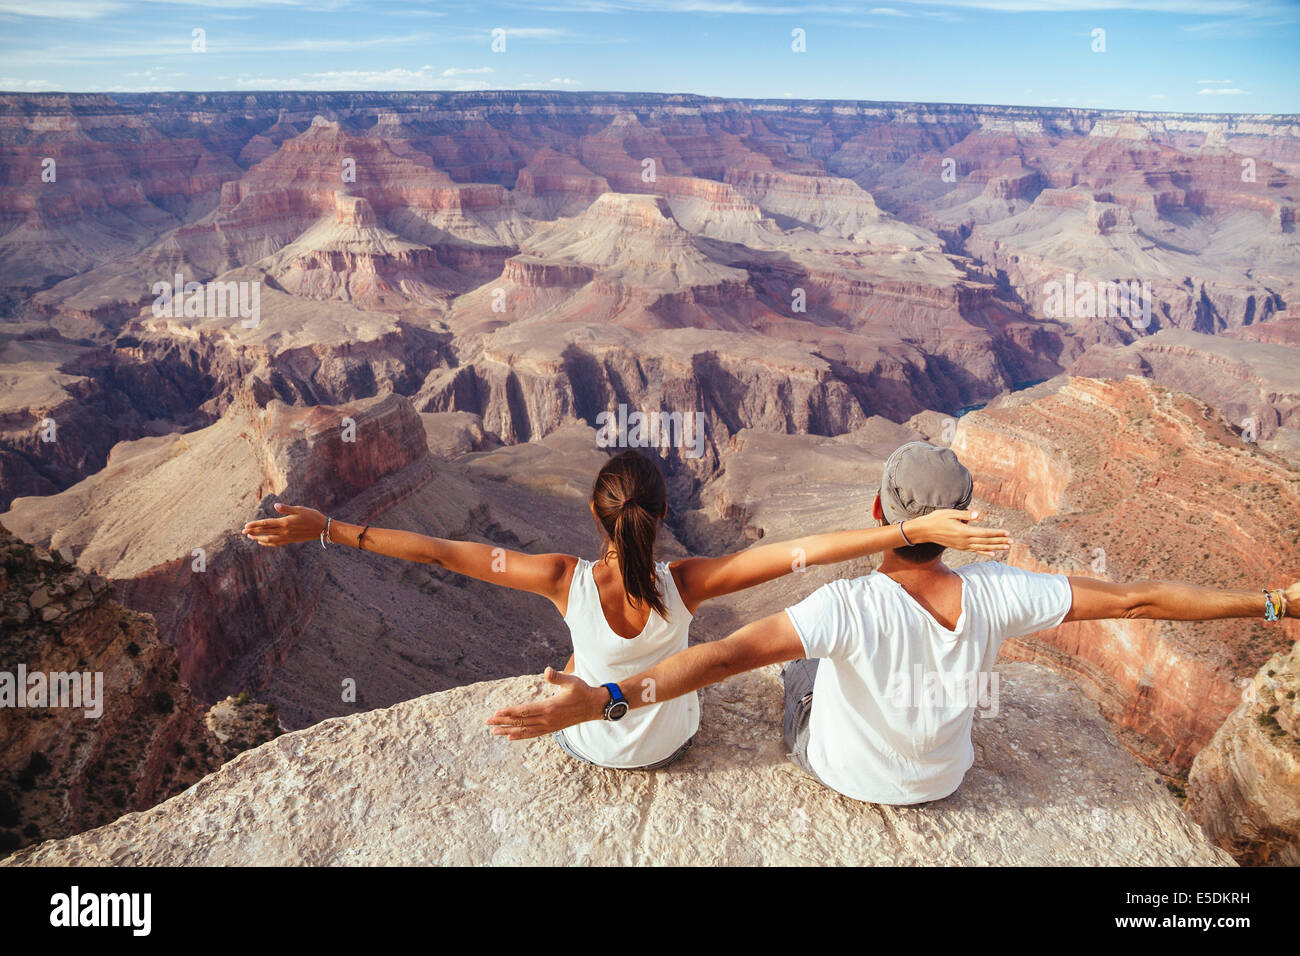 USA, Arizona, couple enjoying the view at Grand Canyon, back view Stock Photo